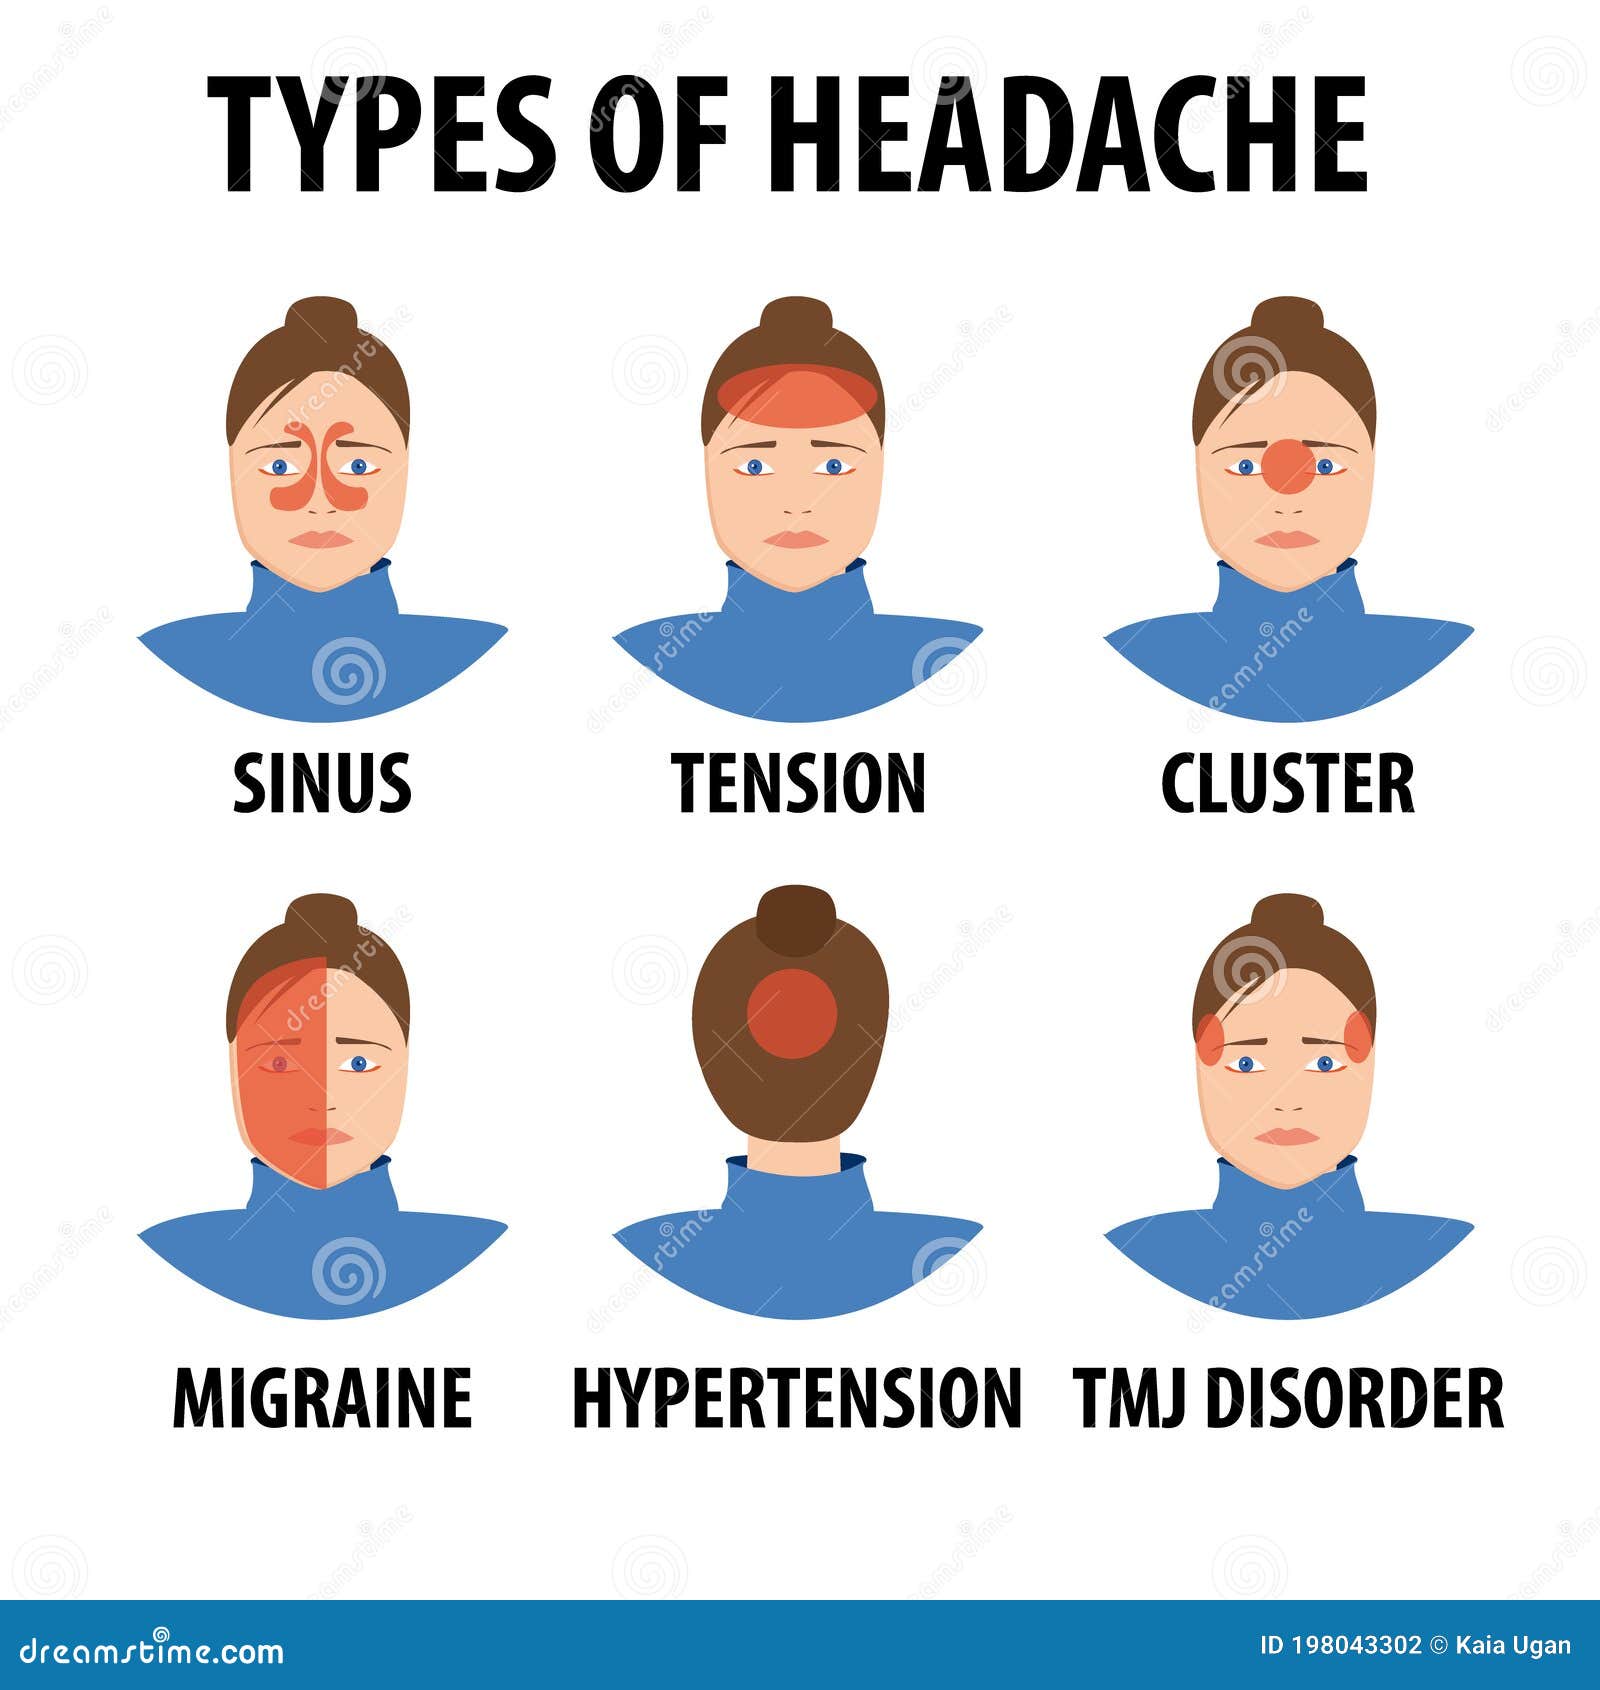 hypertension headache signs)